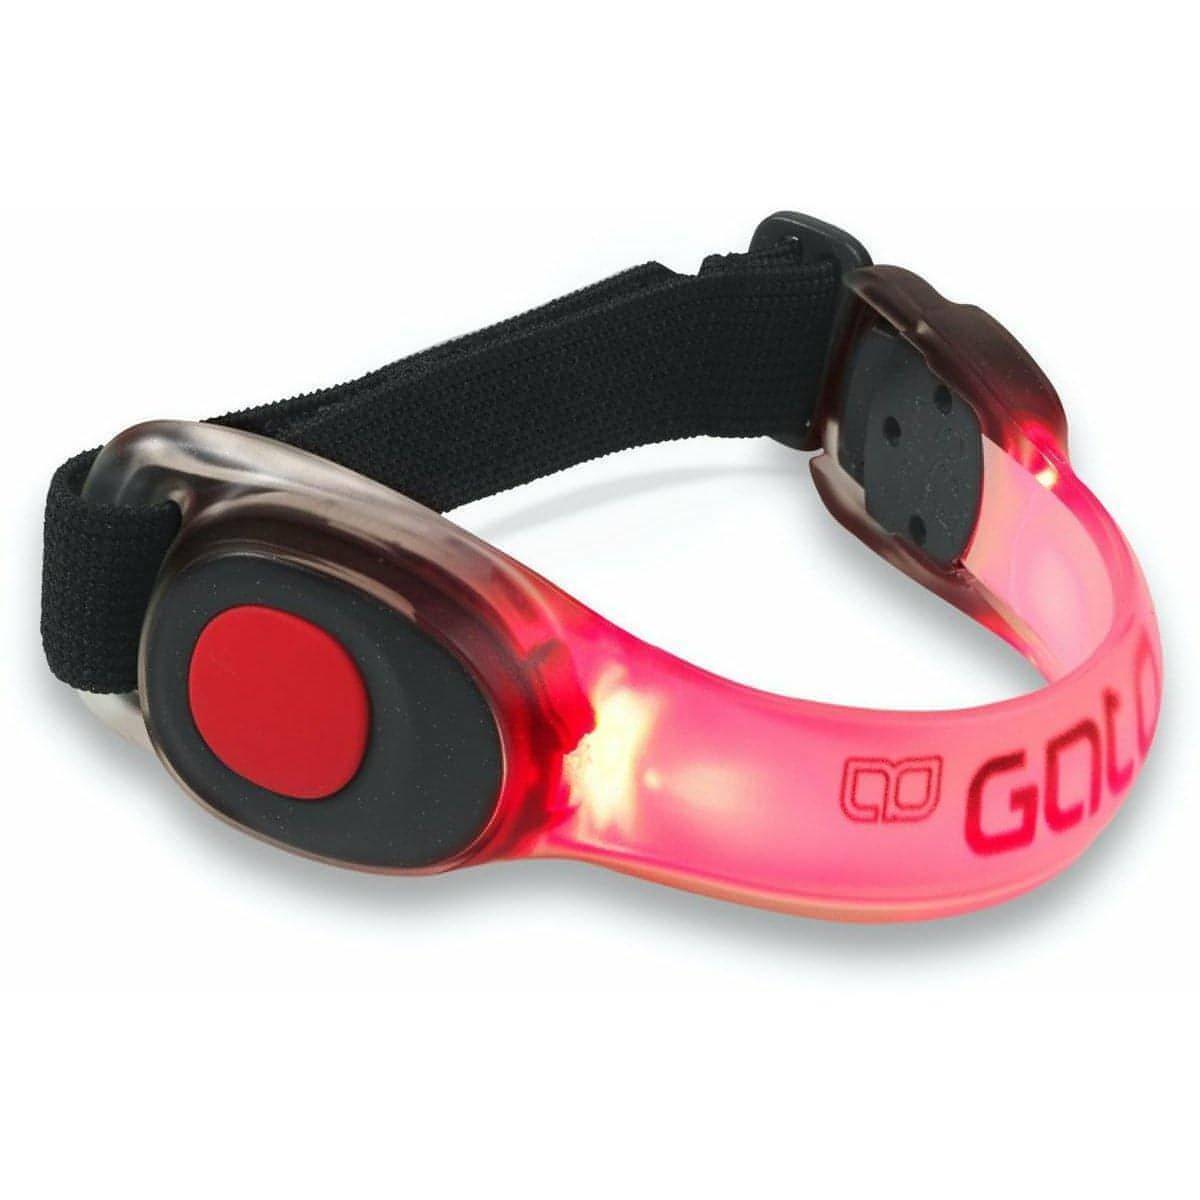 Gato Sports Neon LED Armband - Red 8438475219412 - Start Fitness